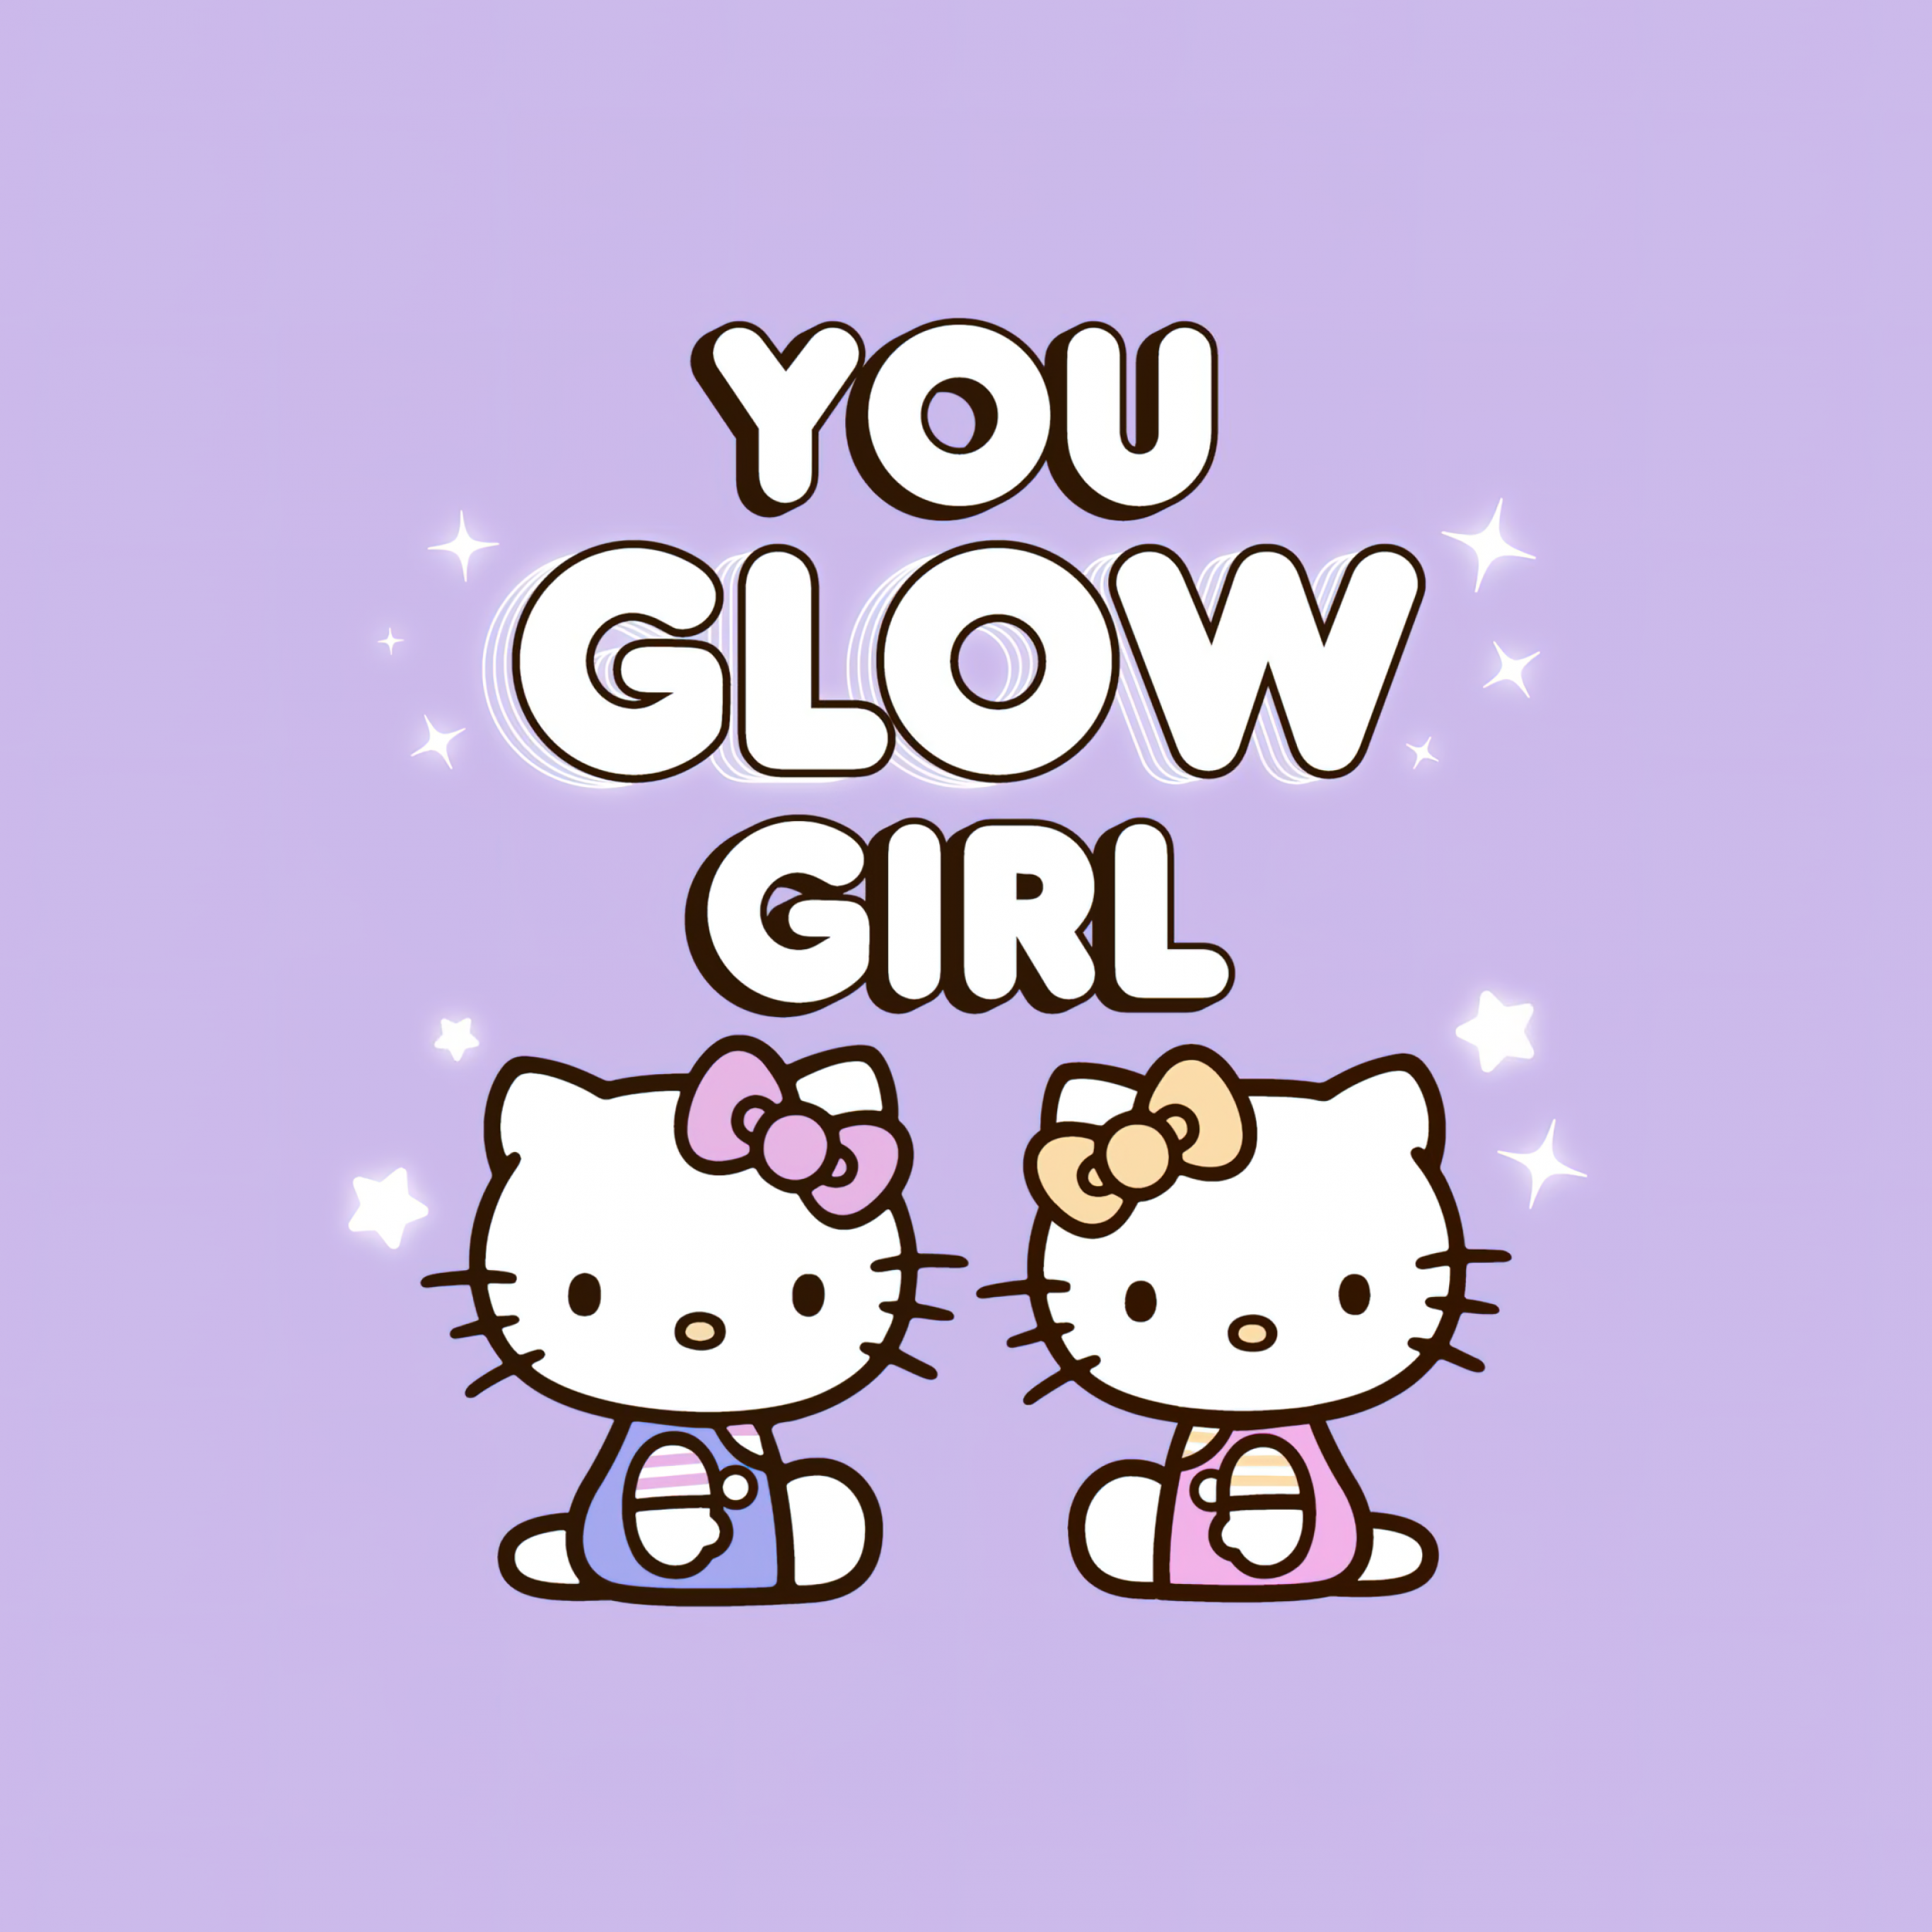 You glow girl Wallpaper 4K, Cute hello kitties, Cute, #9960